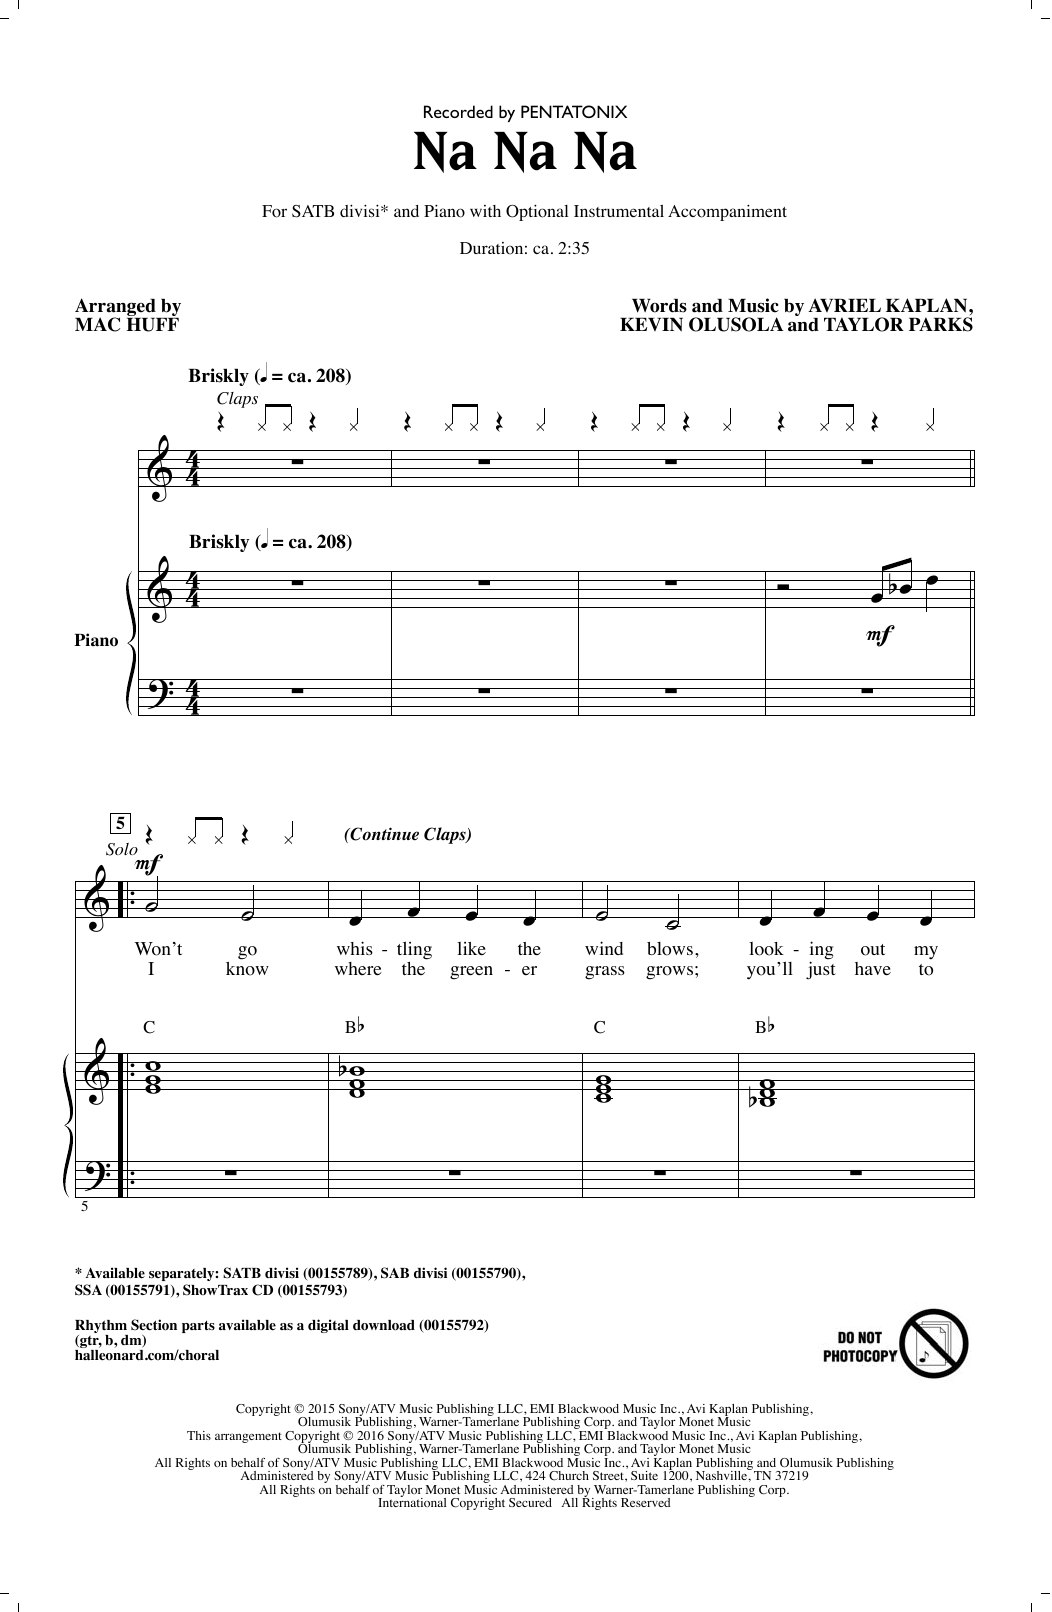 Pentatonix Na Na Na (arr. Mac Huff) Sheet Music Notes & Chords for SATB - Download or Print PDF